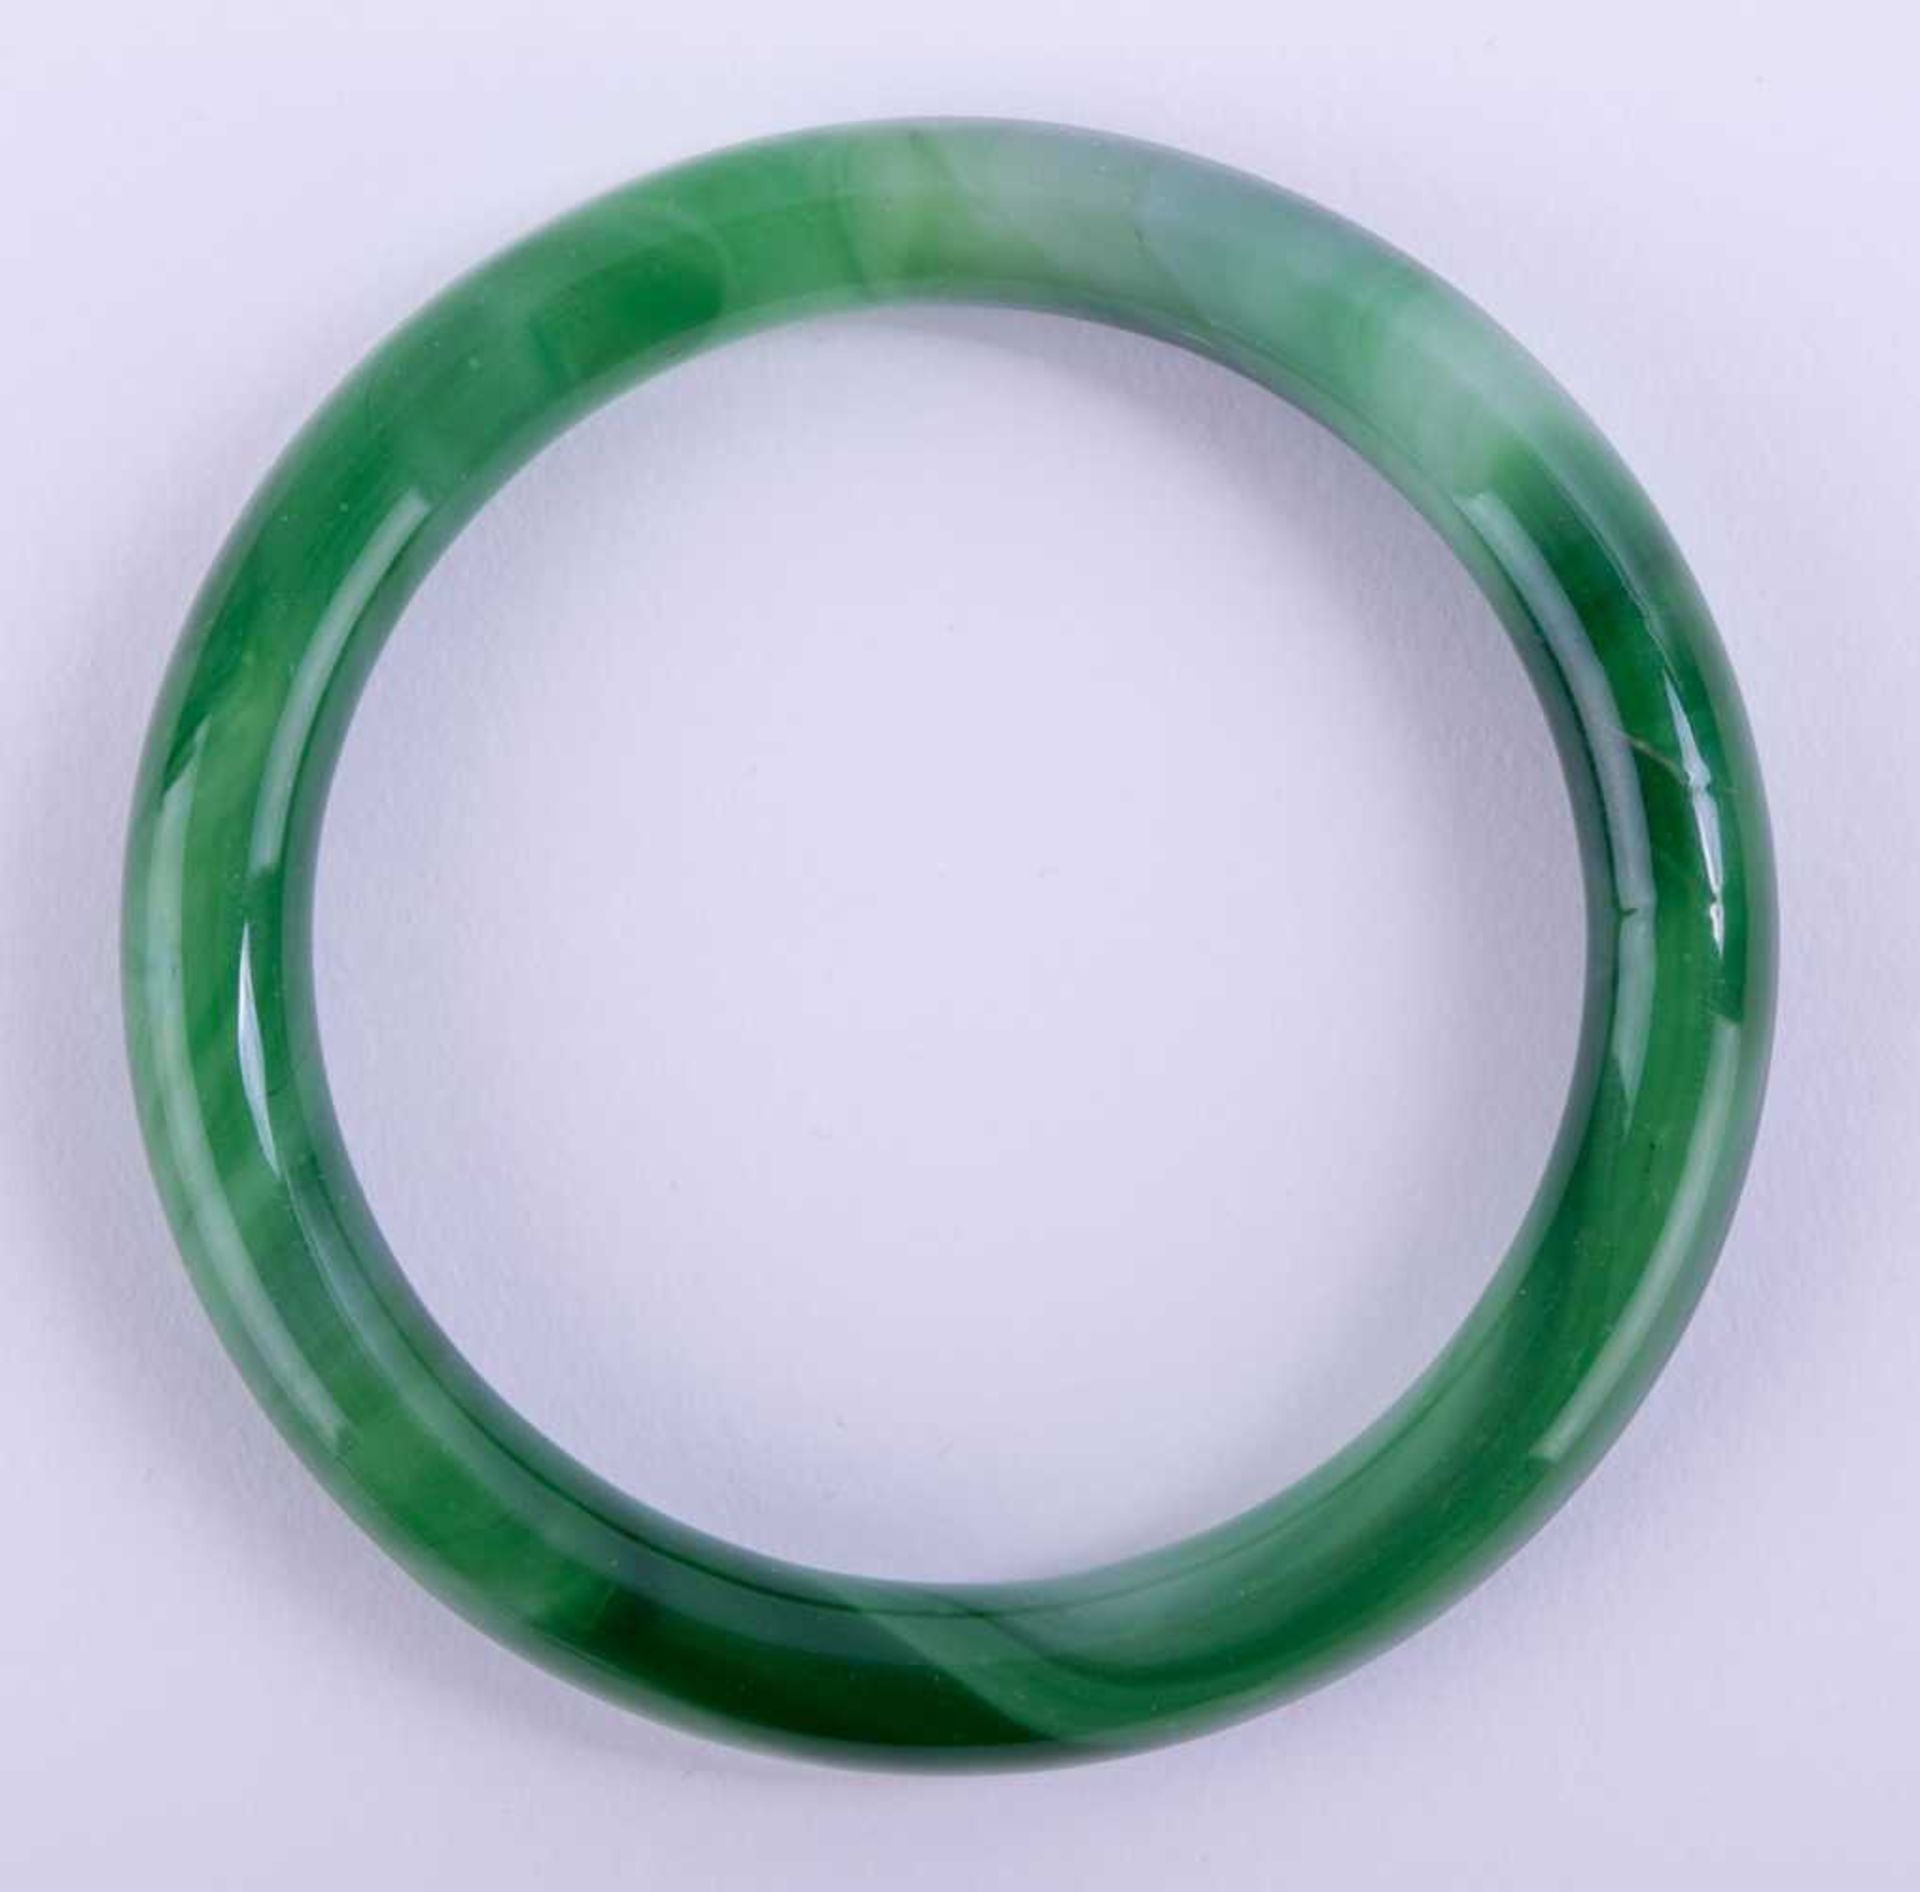 wohl Jade Armreif China 19./20. Jhd. / probably Jade bracelet, China 19th/20th century Ø ca. 7,8 cm